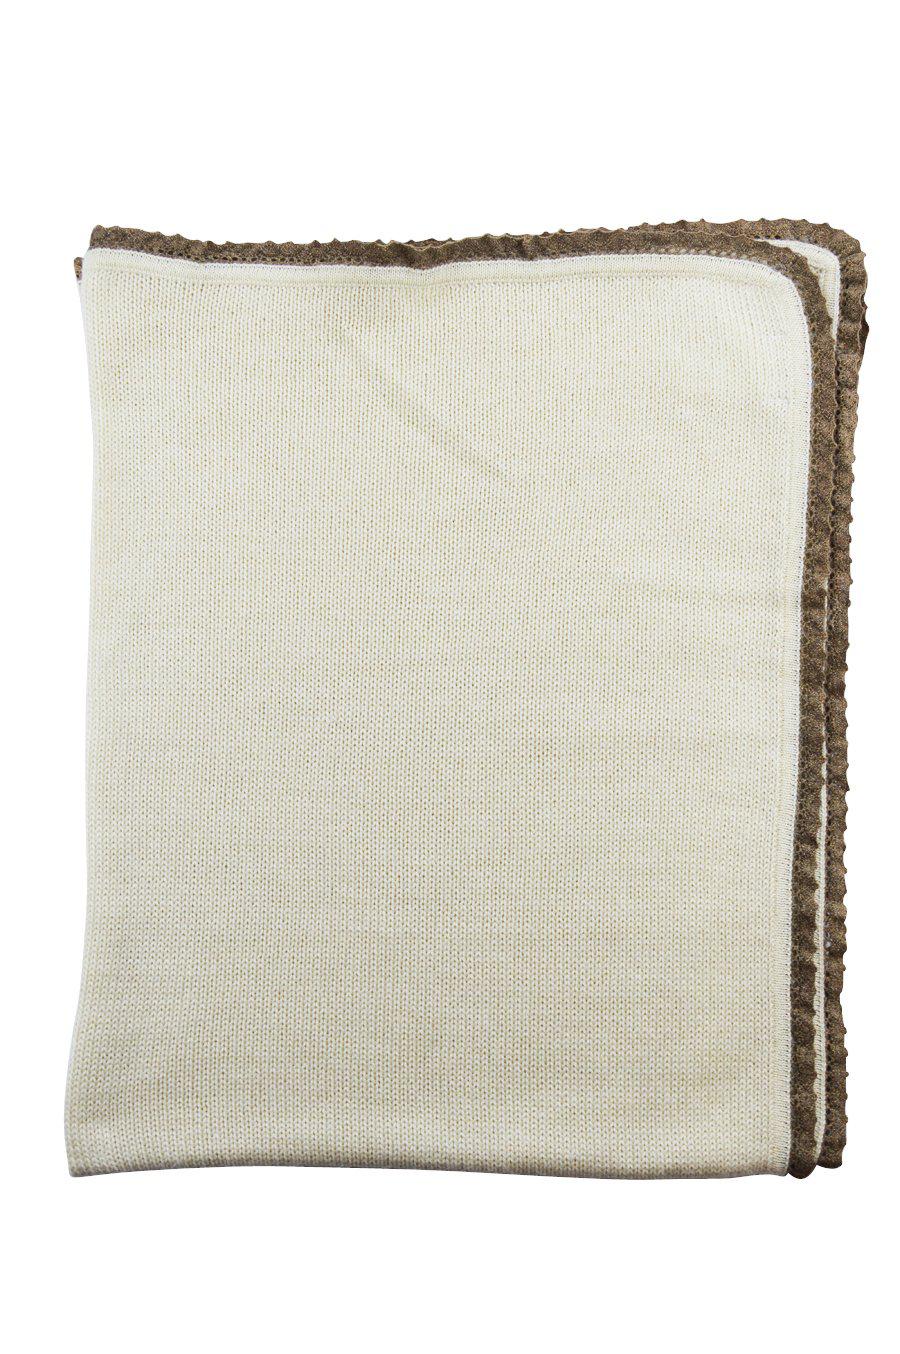 Ivory Alpaca Blanket with Brown Crochet Trim - Little Threads Inc. Children's Clothing